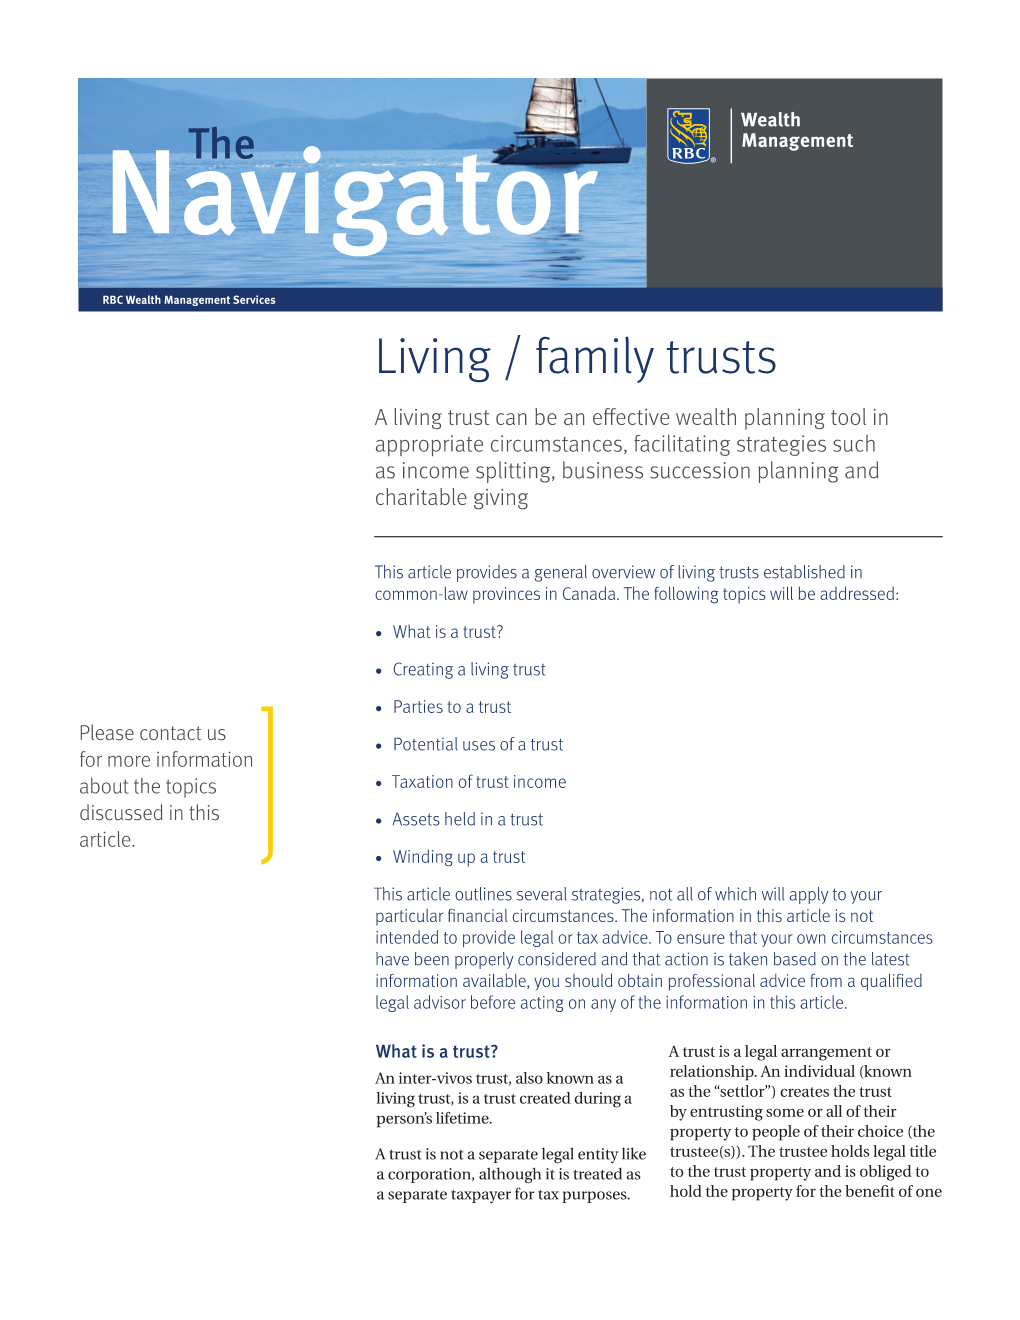 Living / Family Trusts